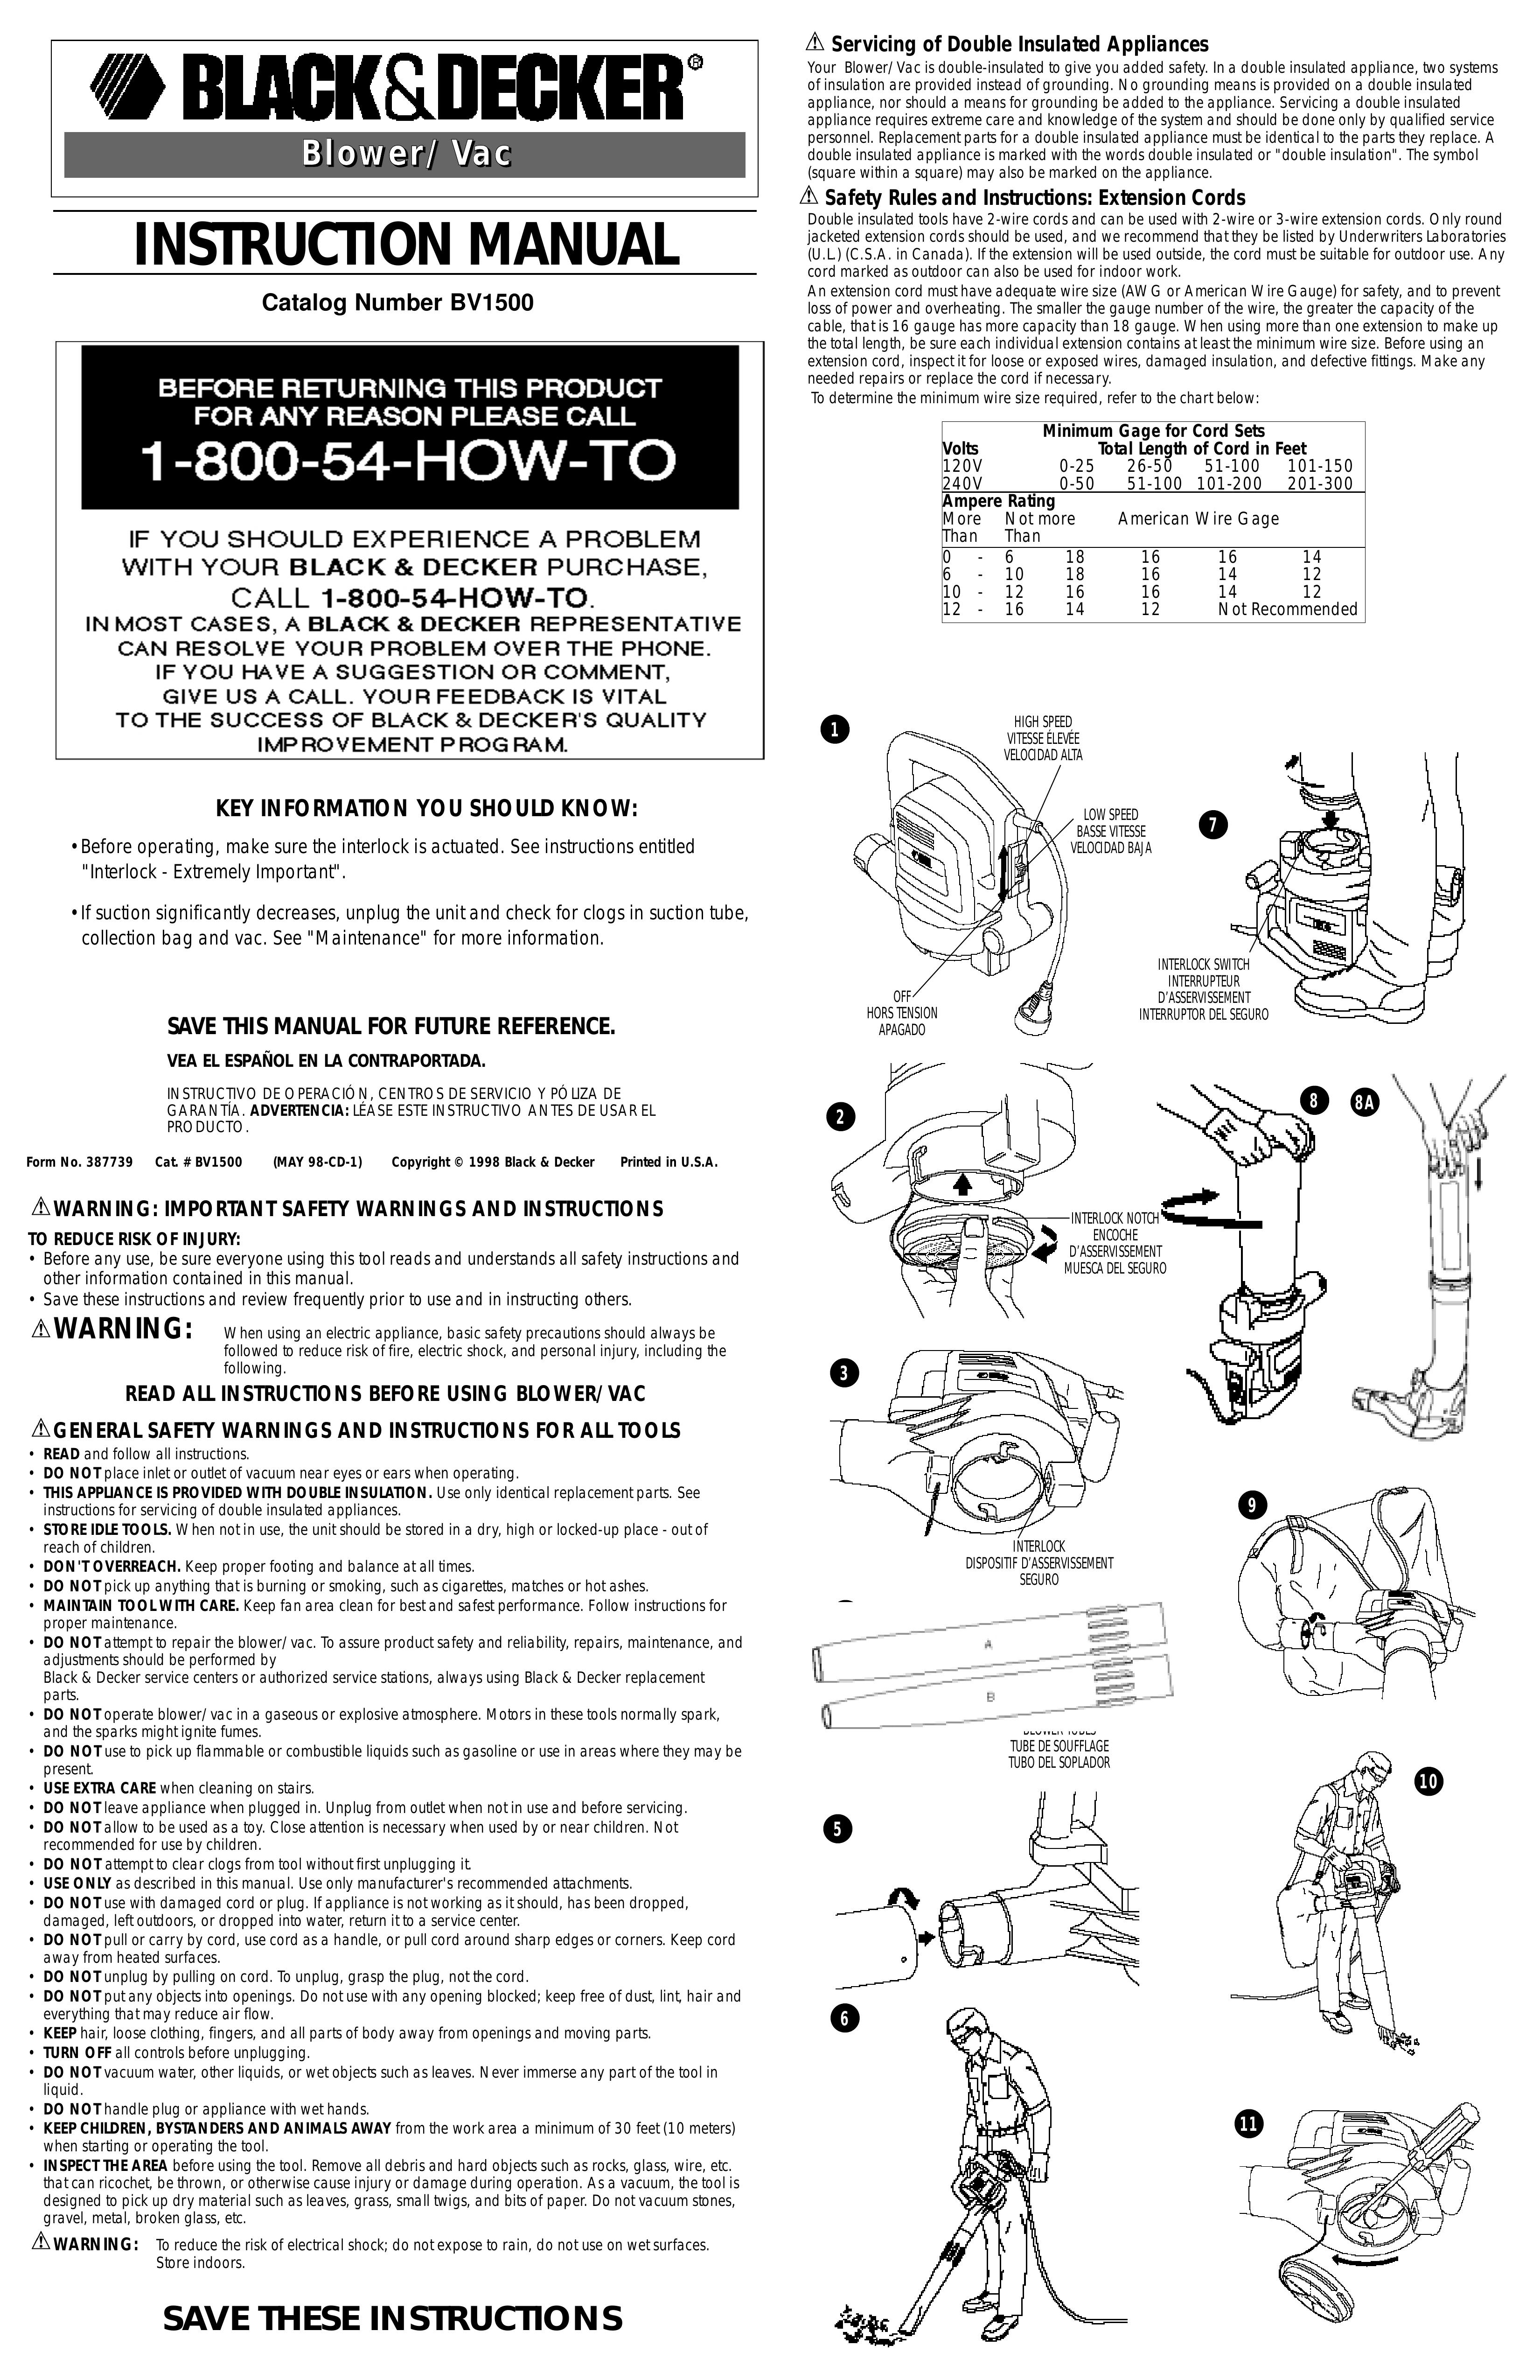 Black & Decker 387739 Blower User Manual